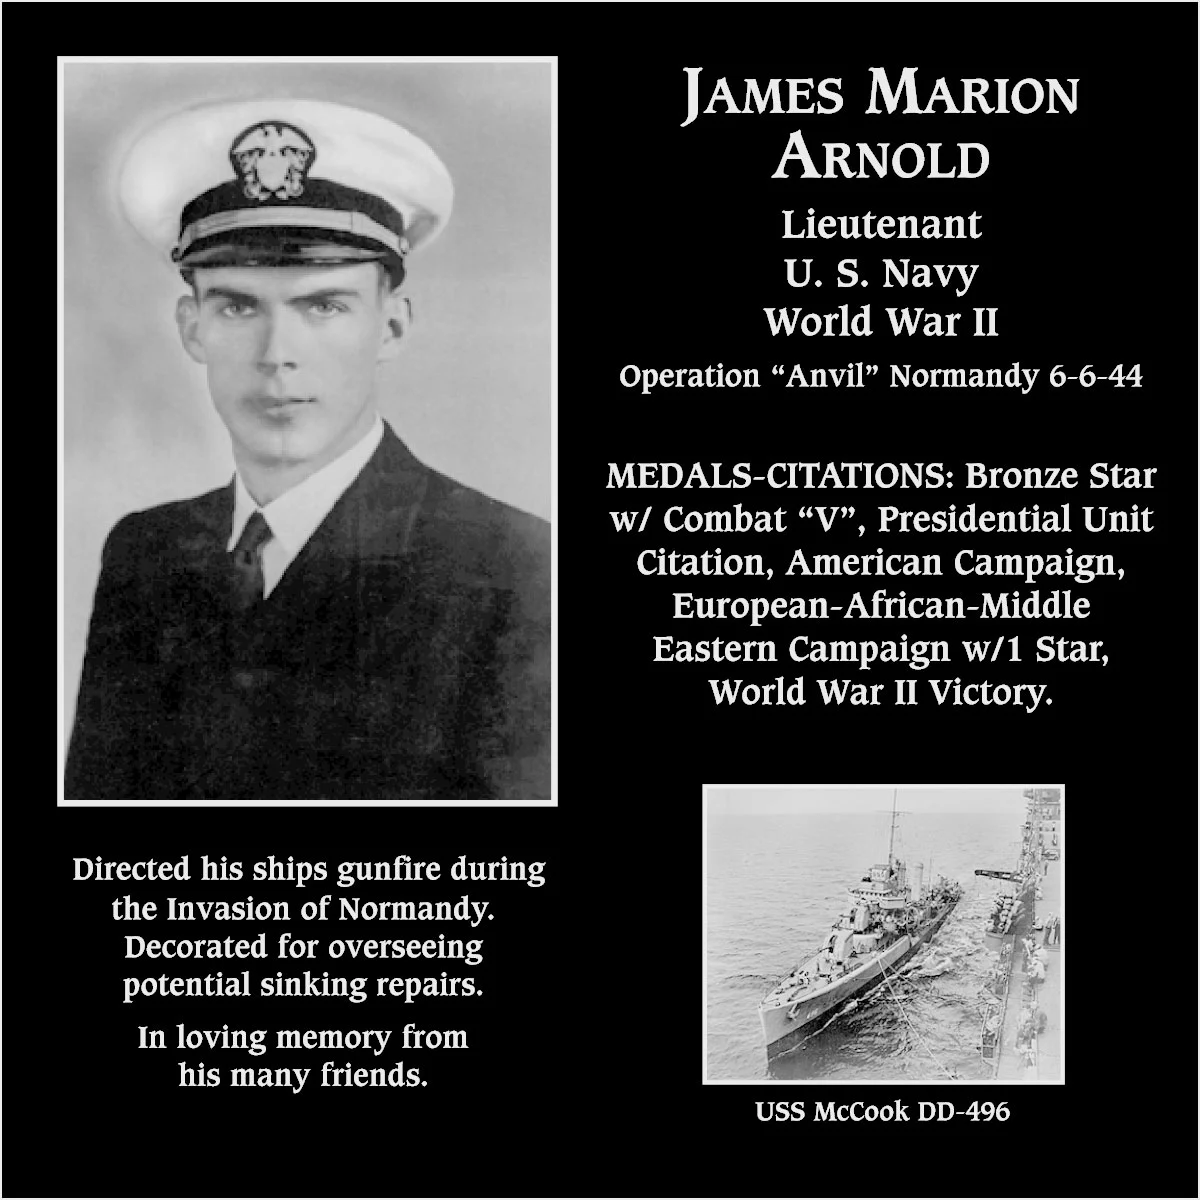 James Marion Arnold